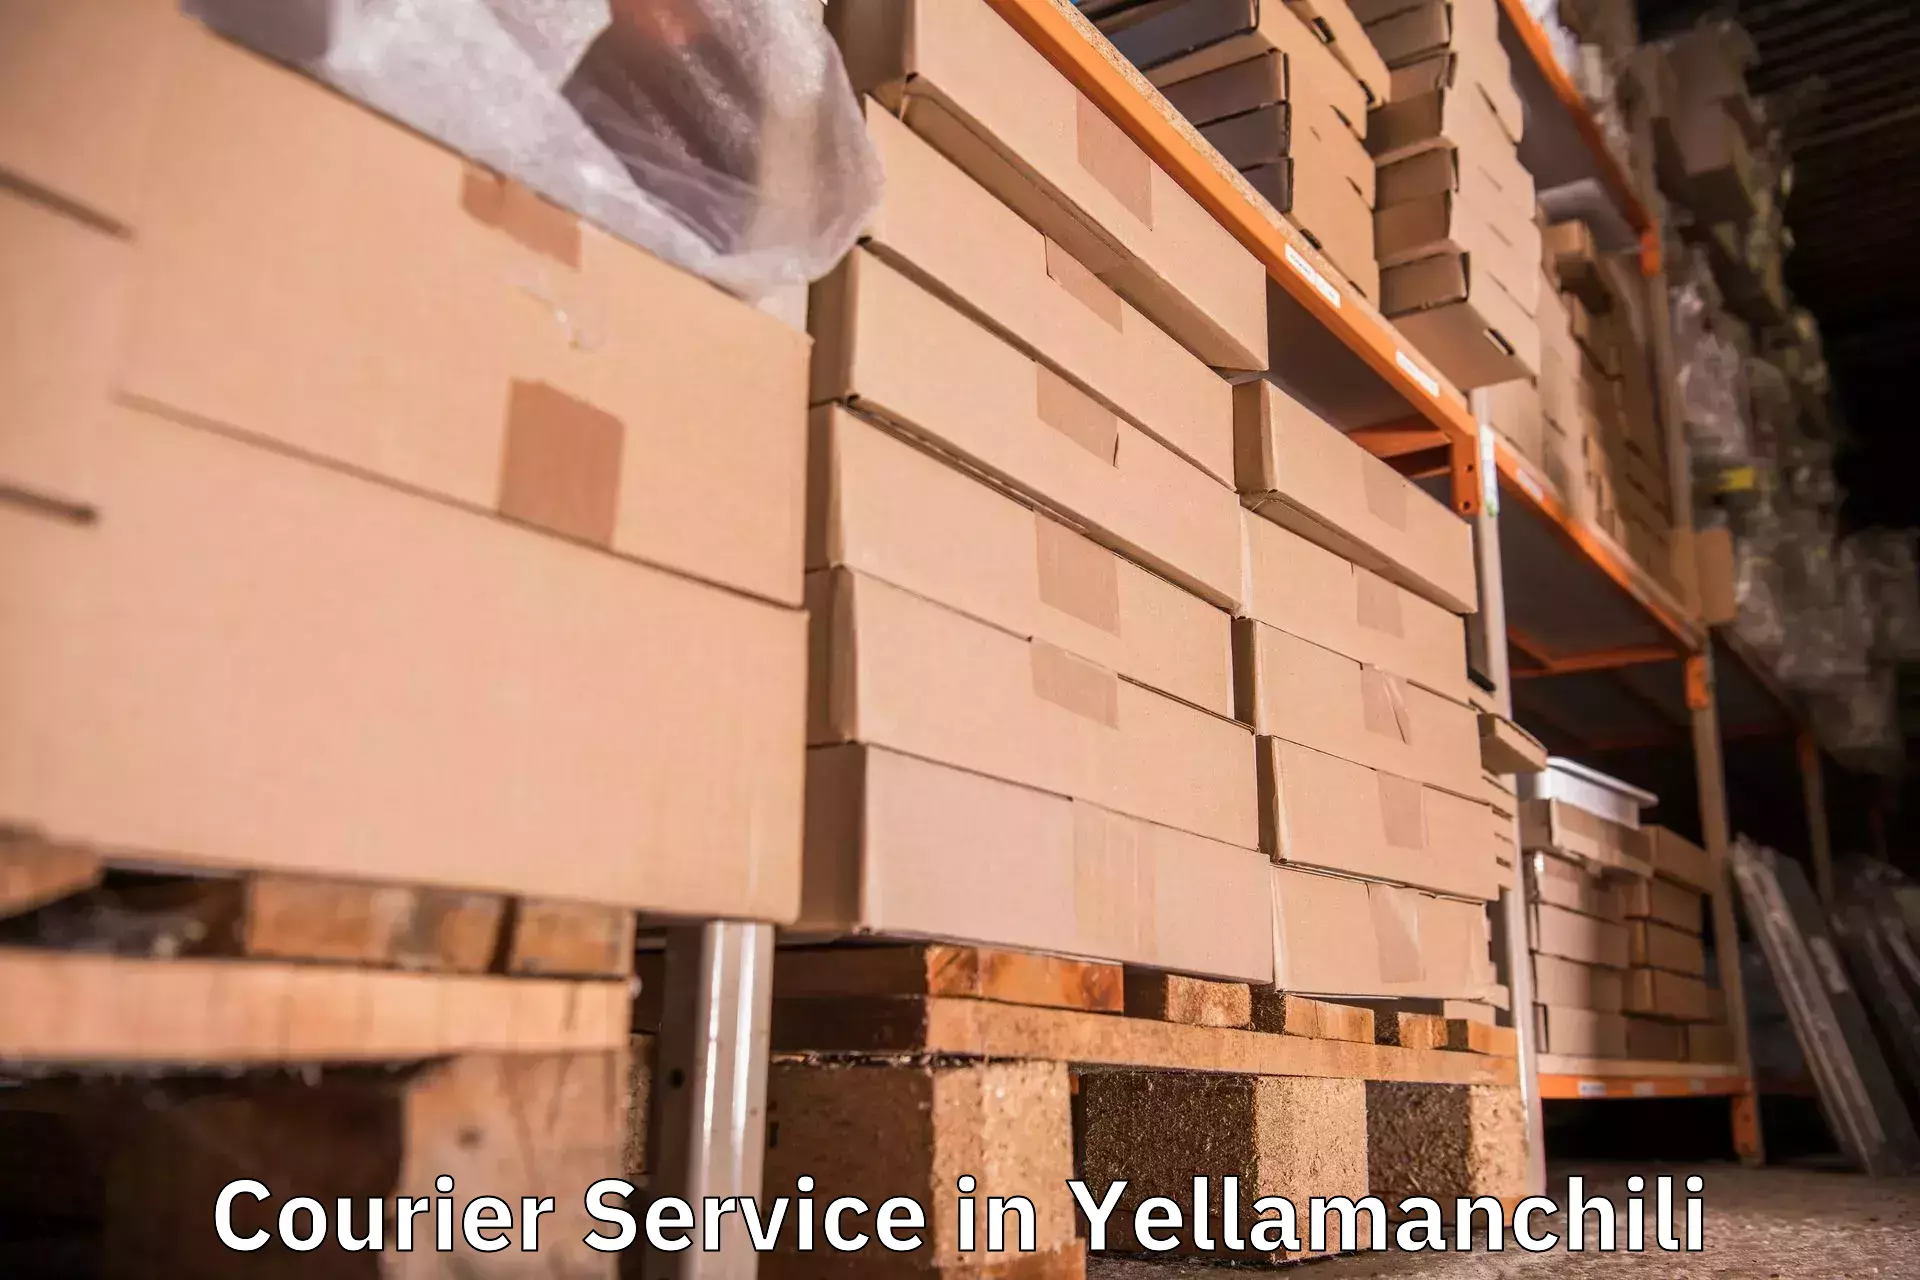 Expedited shipping methods in Yellamanchili